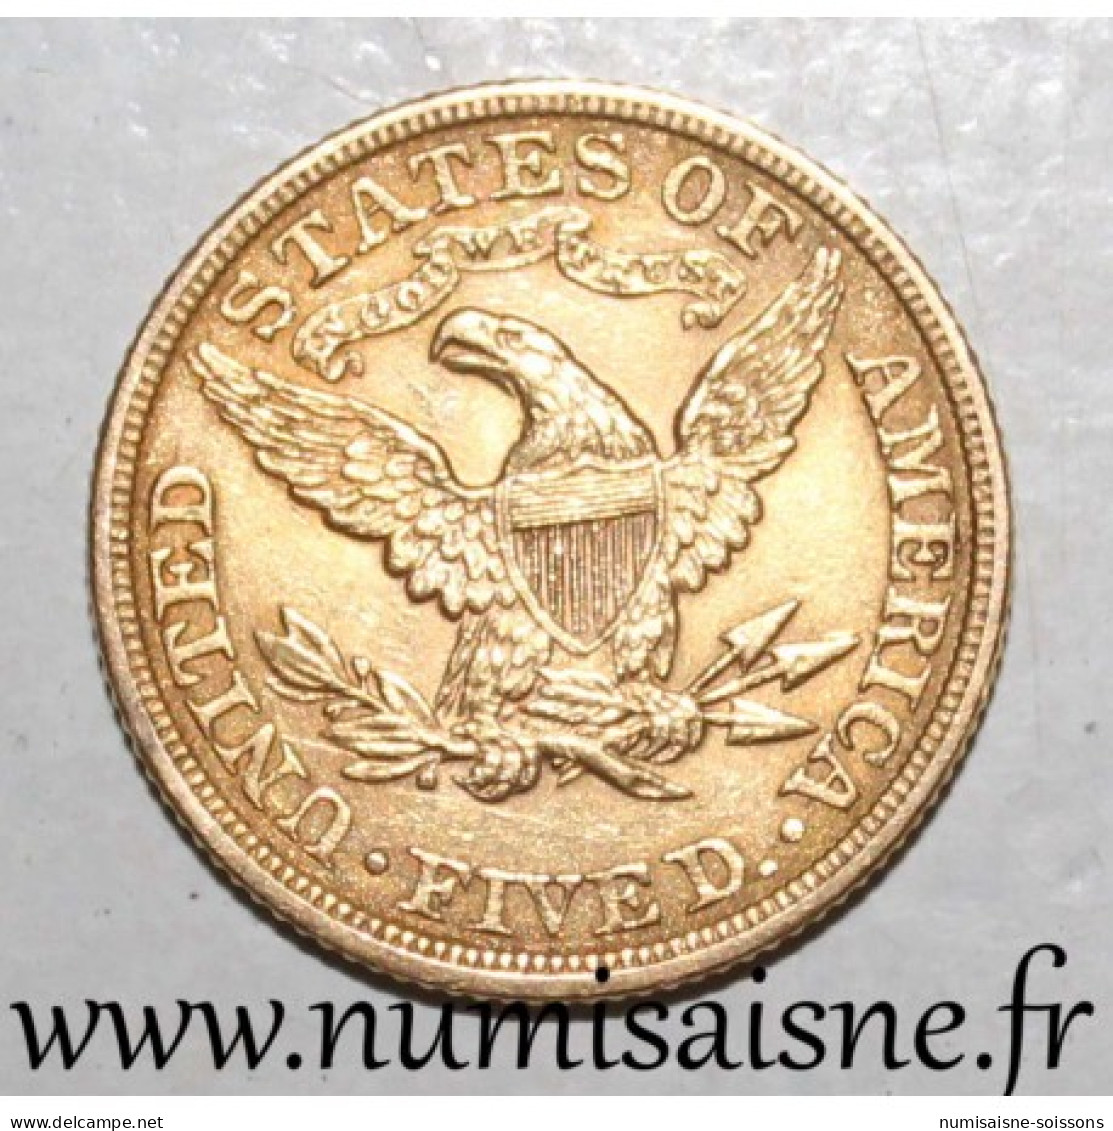 ÉTATS UNIS - KM 101 - 5 DOLLARS 1899 - Philadelphie - LIBERTY - OR - TTB - 5$ - Half Eagle - 1866-1908: Coronet Head